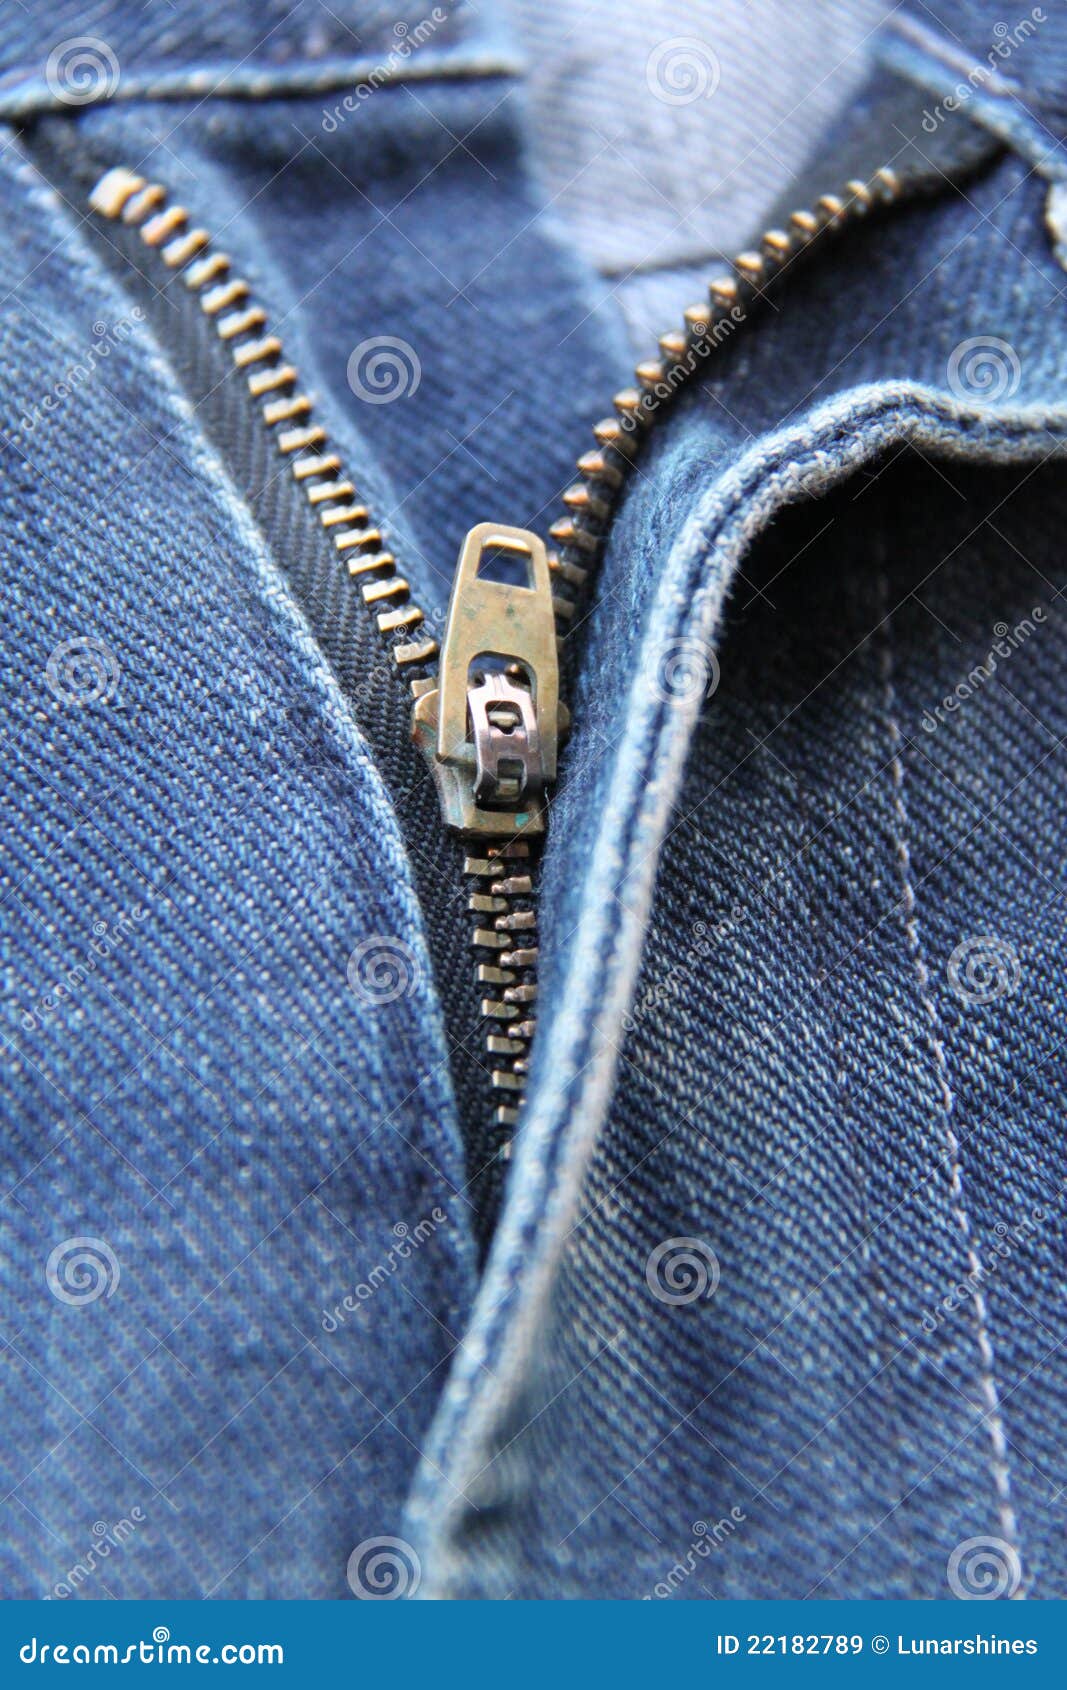 Details of open zipper stock image. Image of brass, undress - 22182789